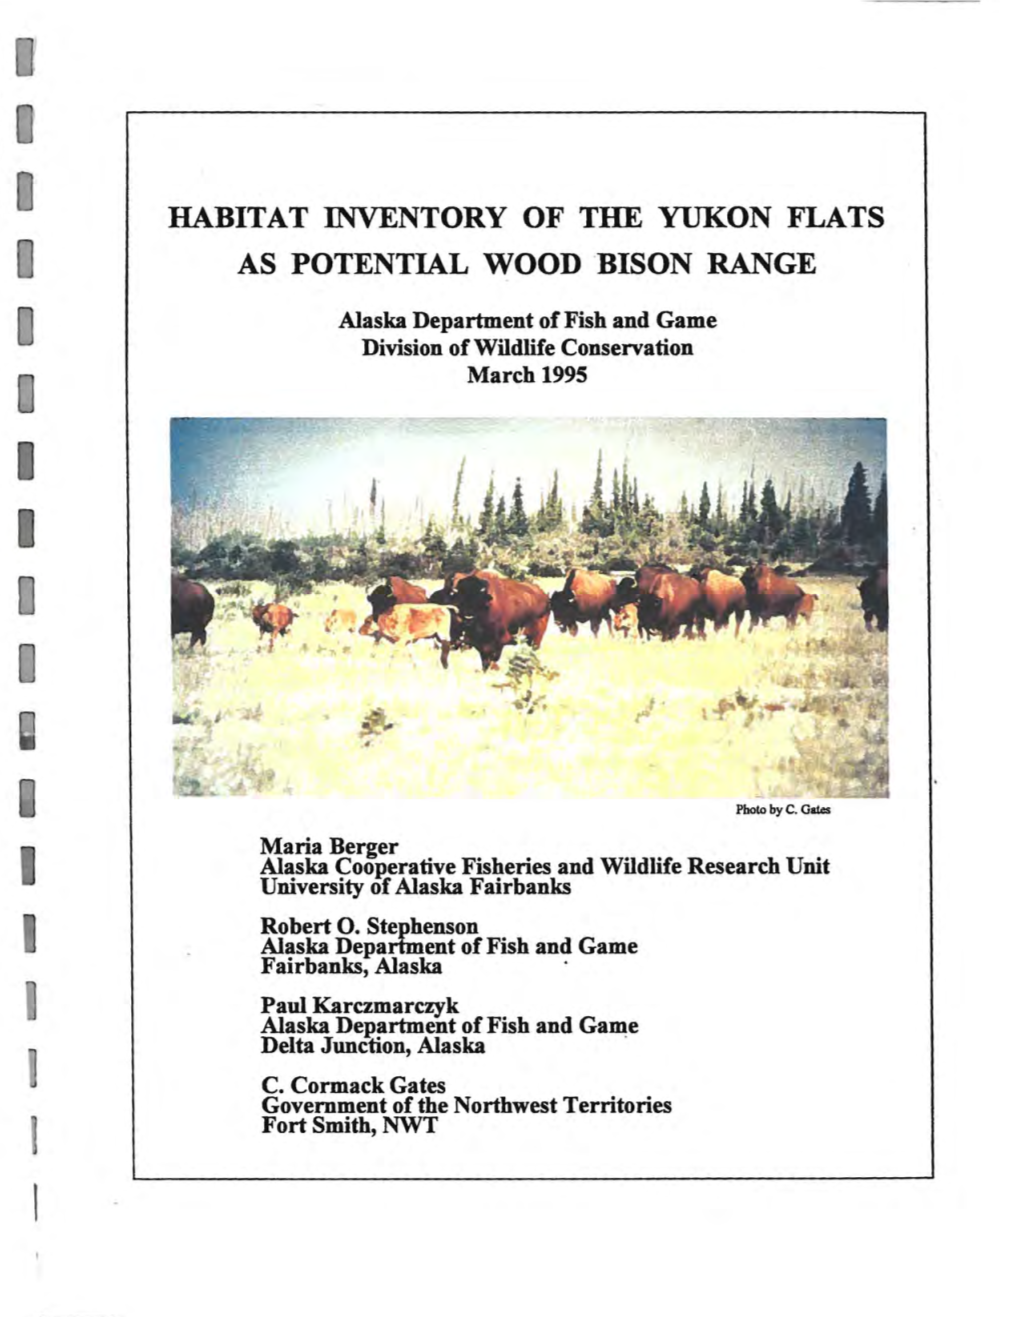 Habitat Inventory of the Yukon Flats As Potential Wood Bison Range